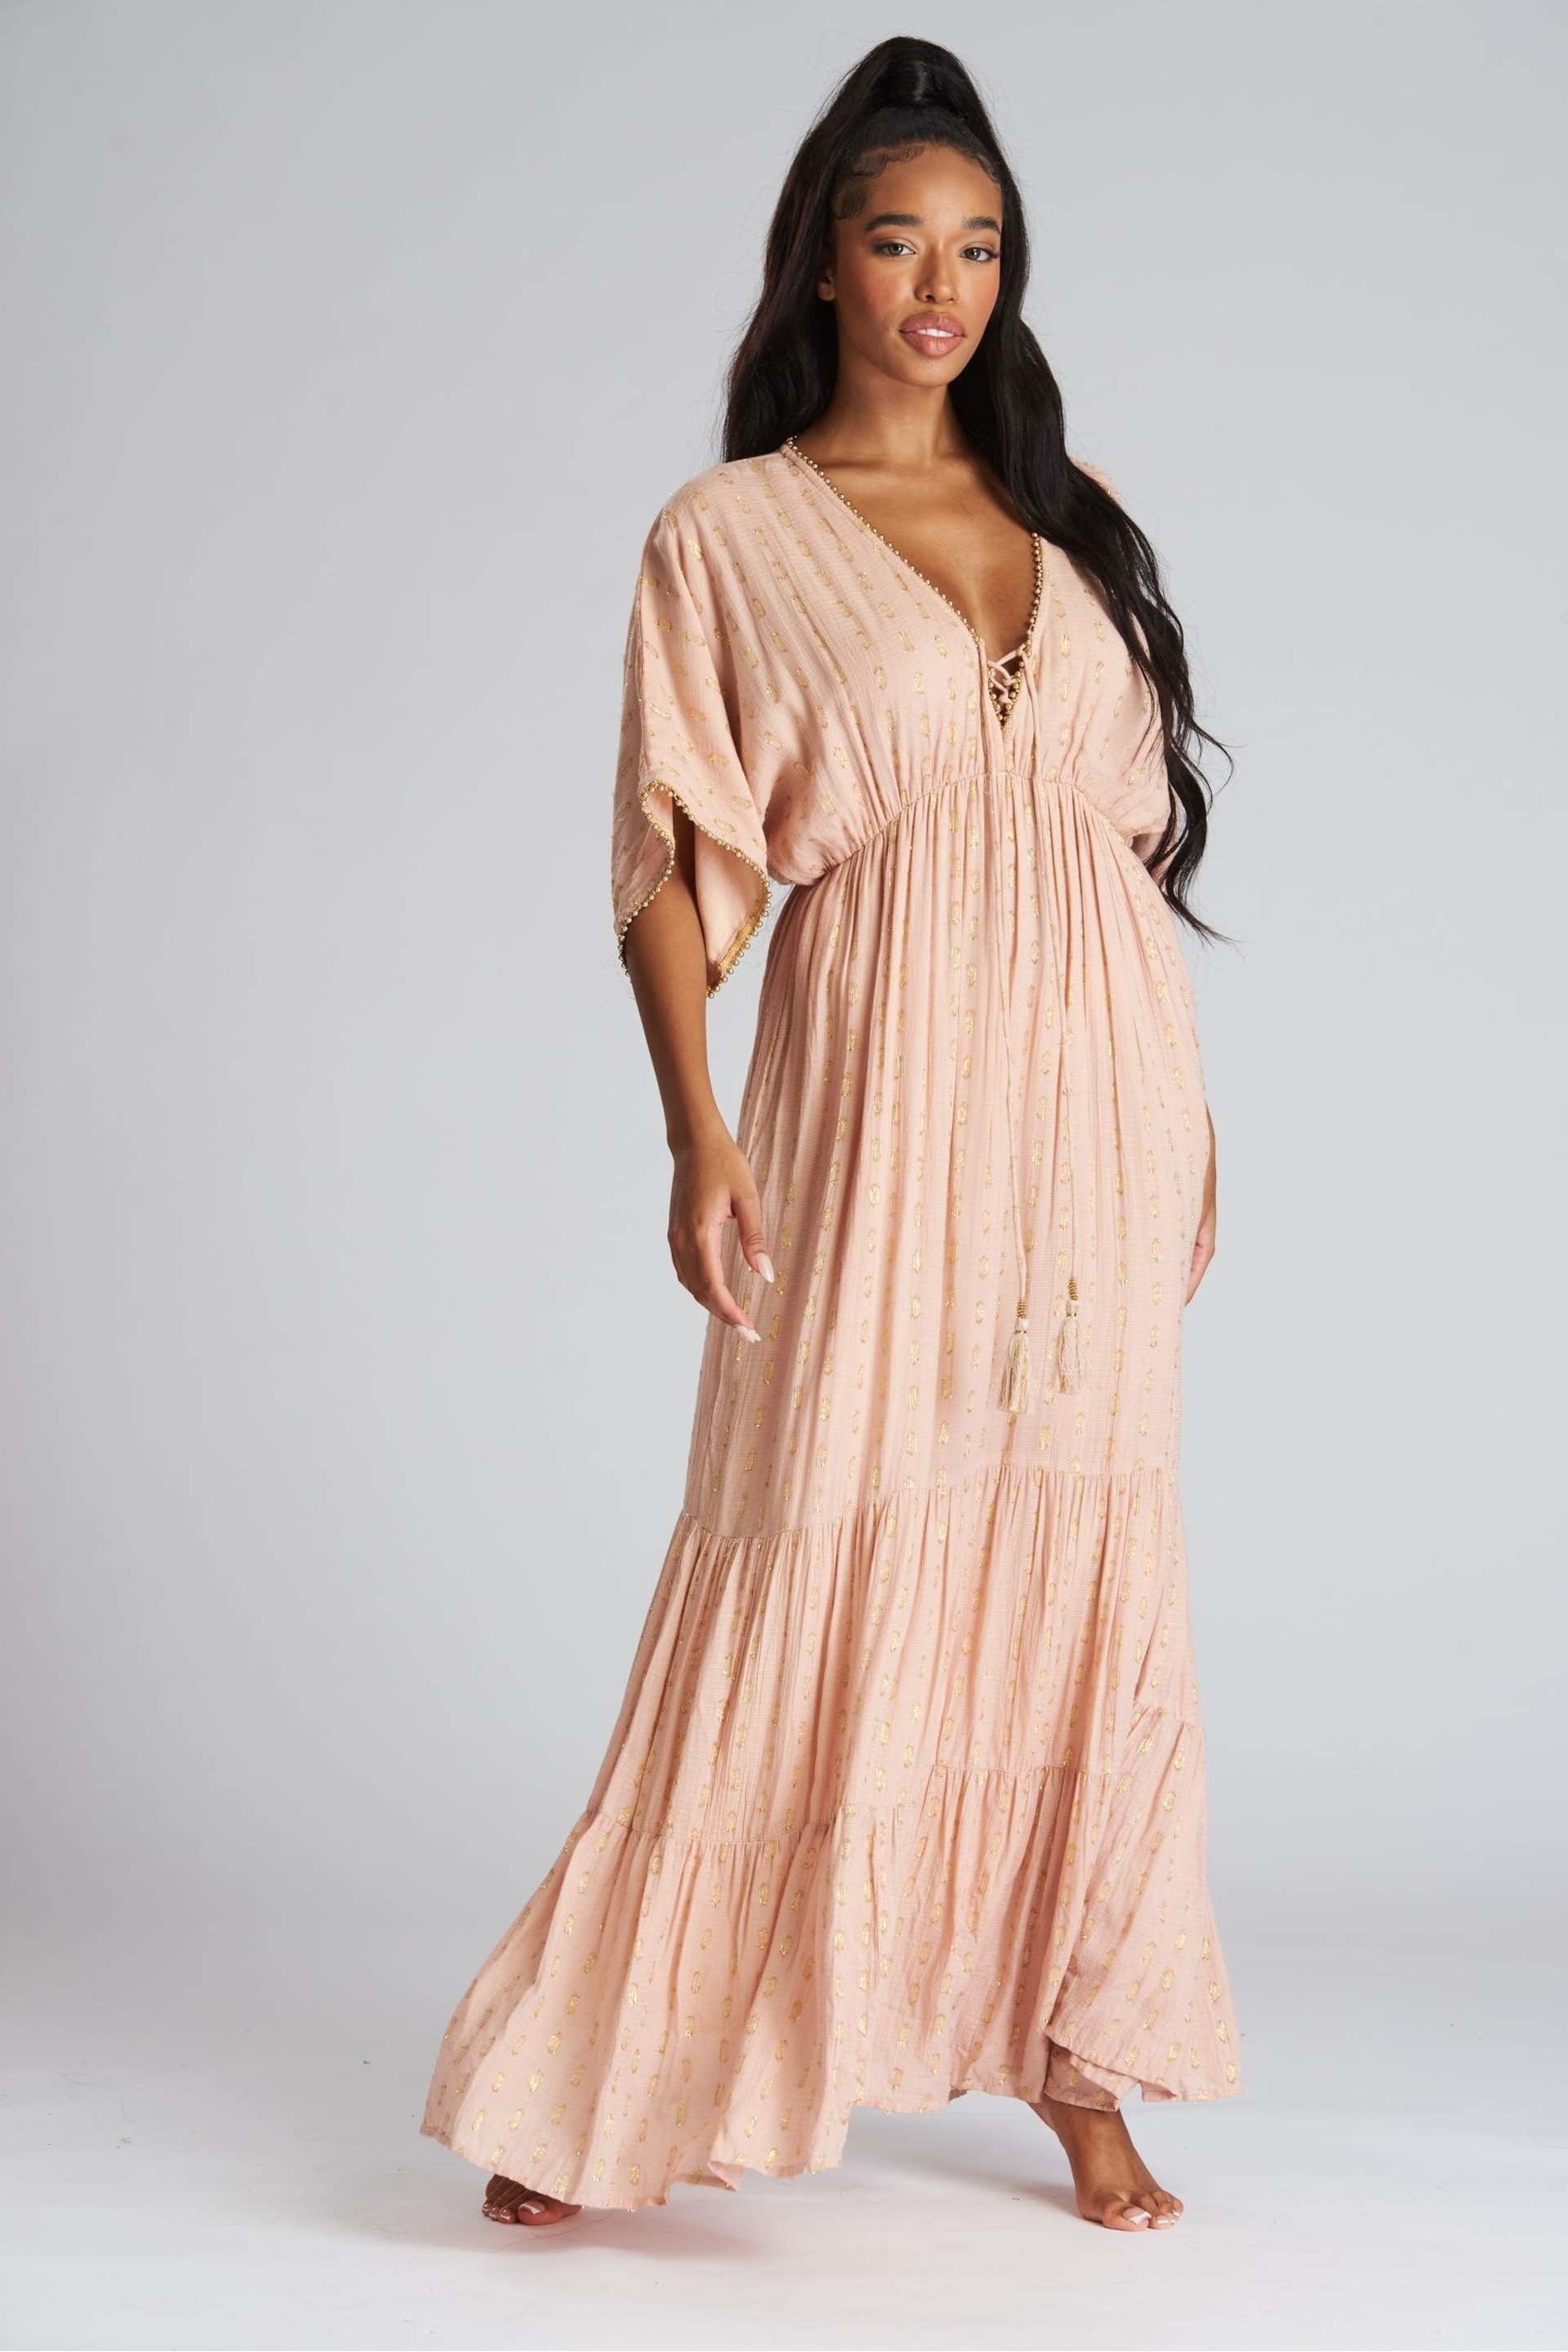 South Beach Pink Metallic Tiered Maxi Dress - Image 2 of 5